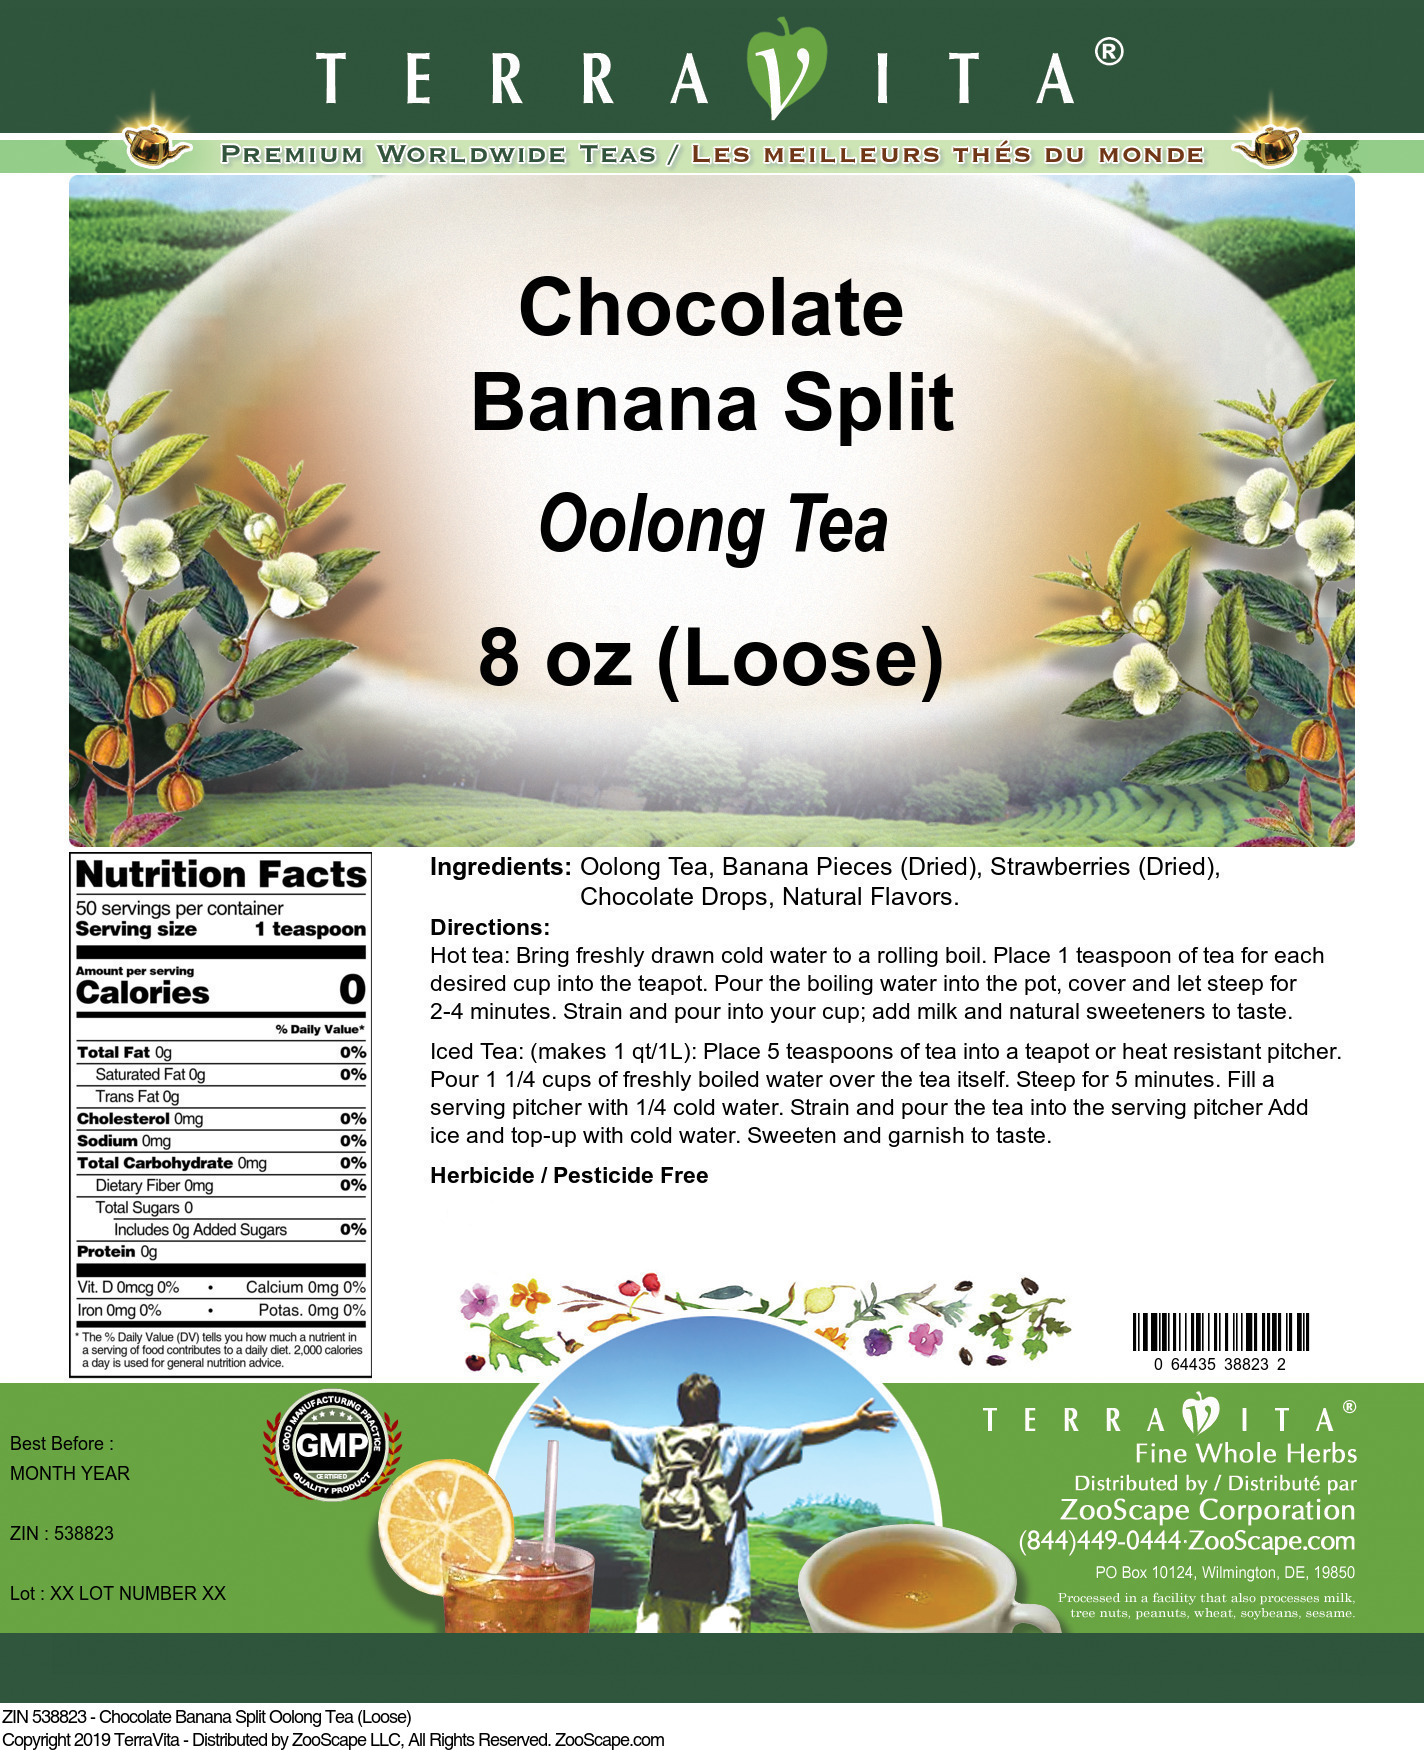 Chocolate Banana Split Oolong Tea (Loose) - Label